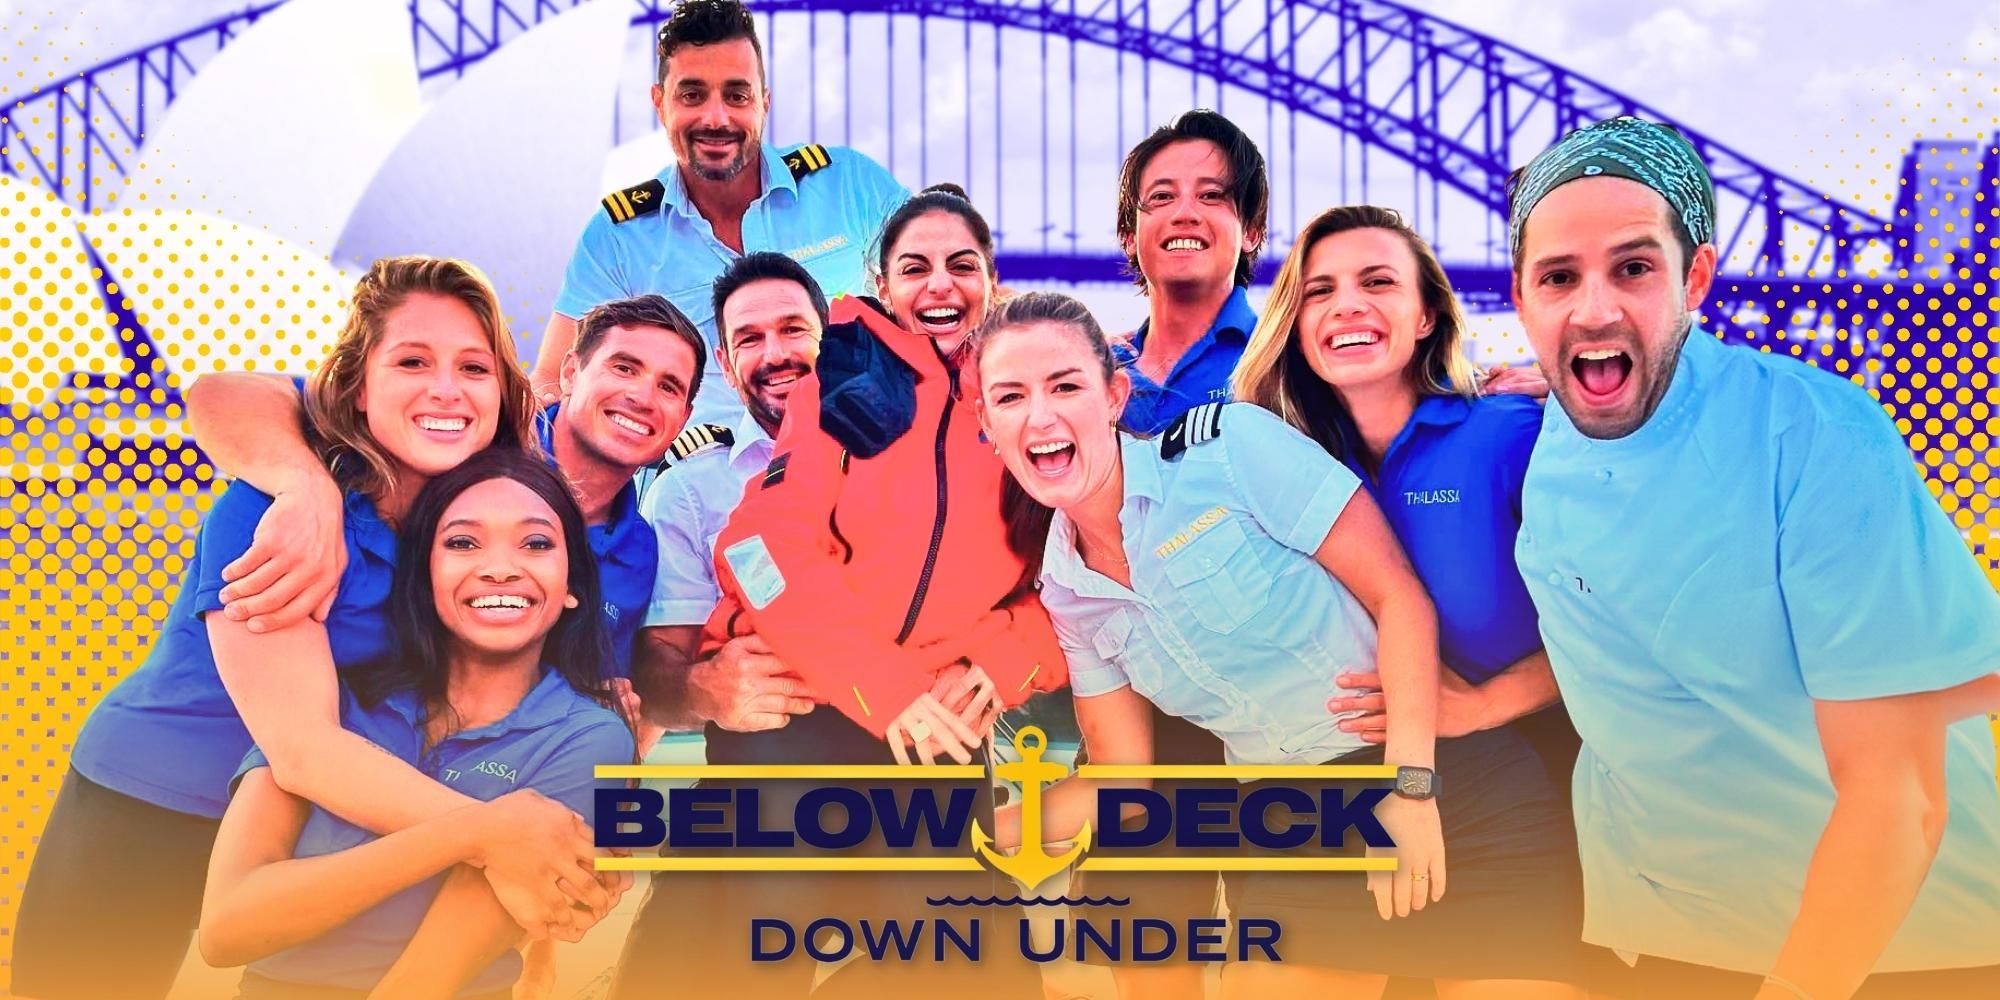  Below Deck Down Under Season 1 cast